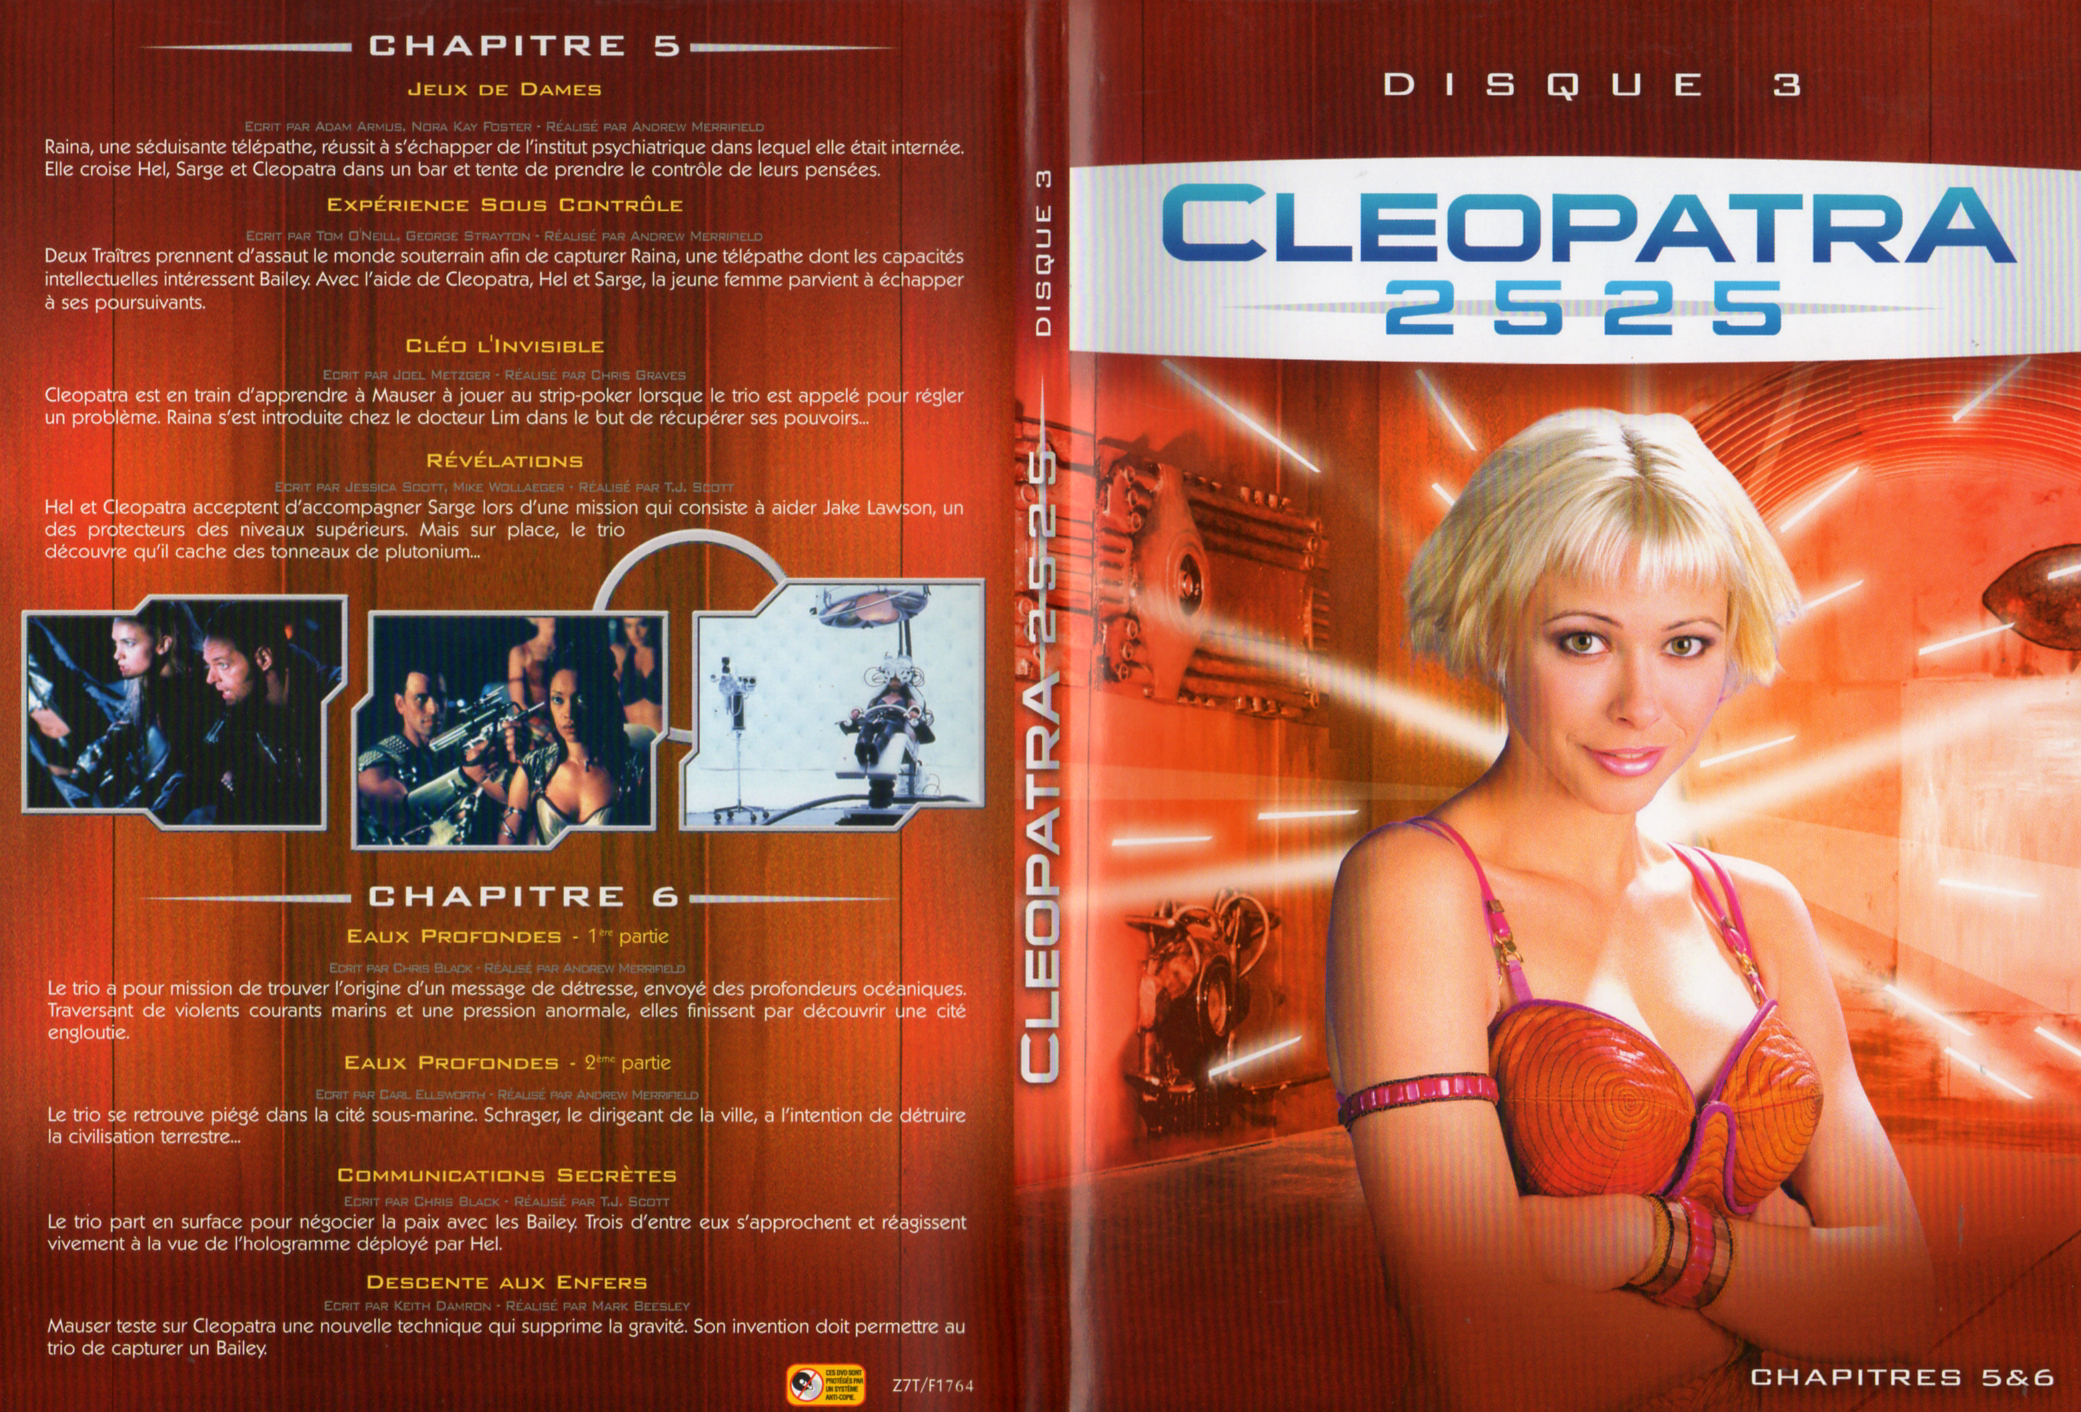 Jaquette DVD Cleopatra 2525 DVD 3